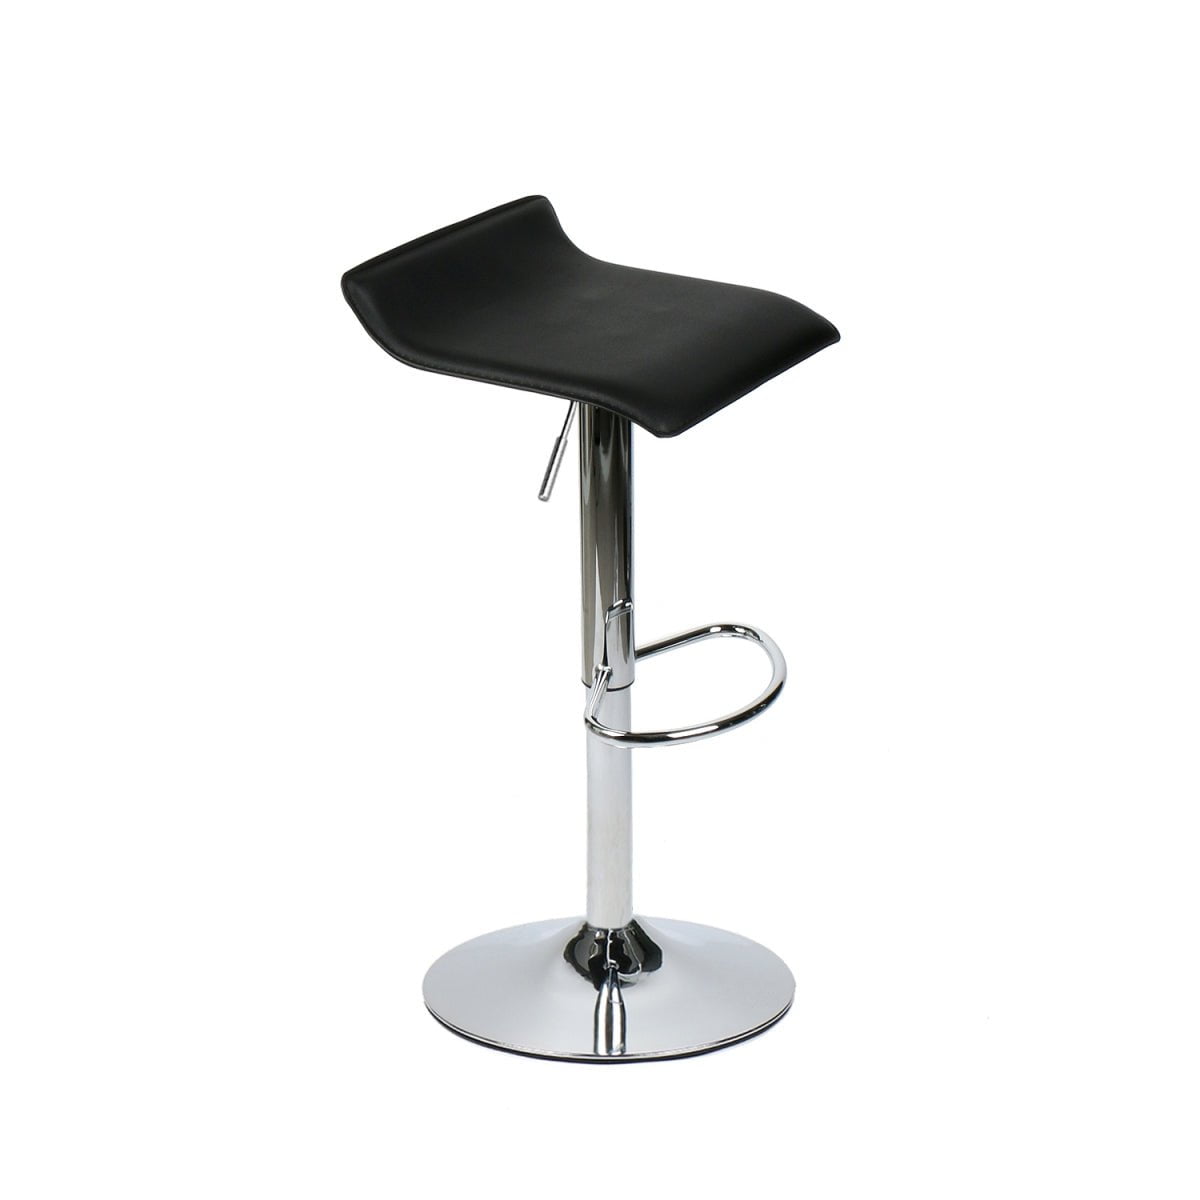 Elecwish black bar stool OW002